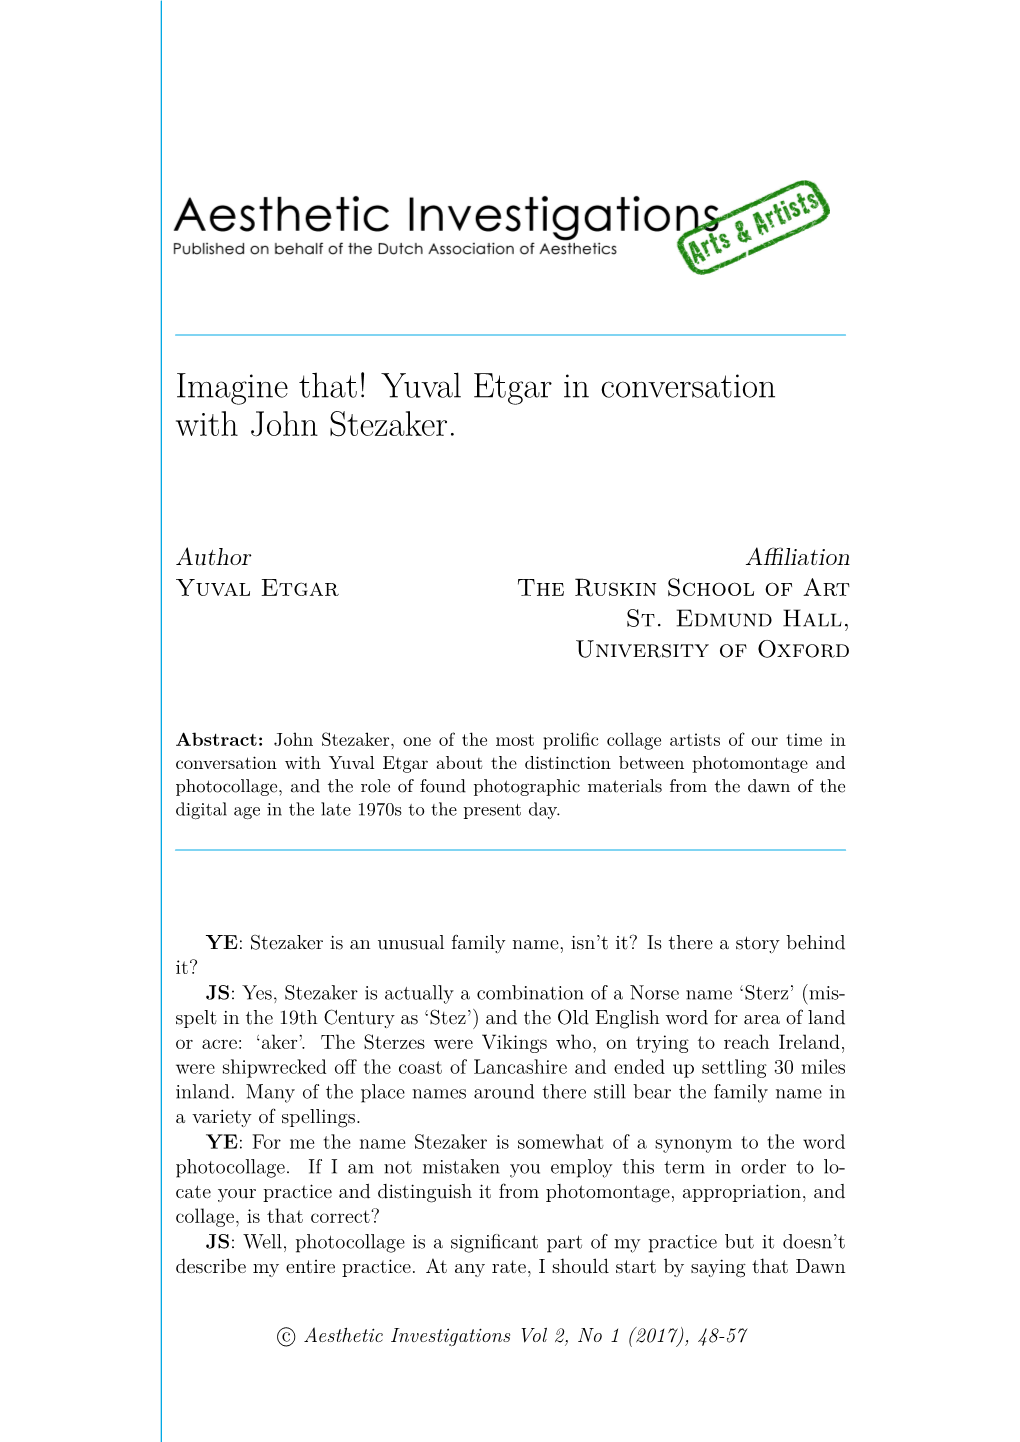 Imagine That! Yuval Etgar in Conversation with John Stezaker